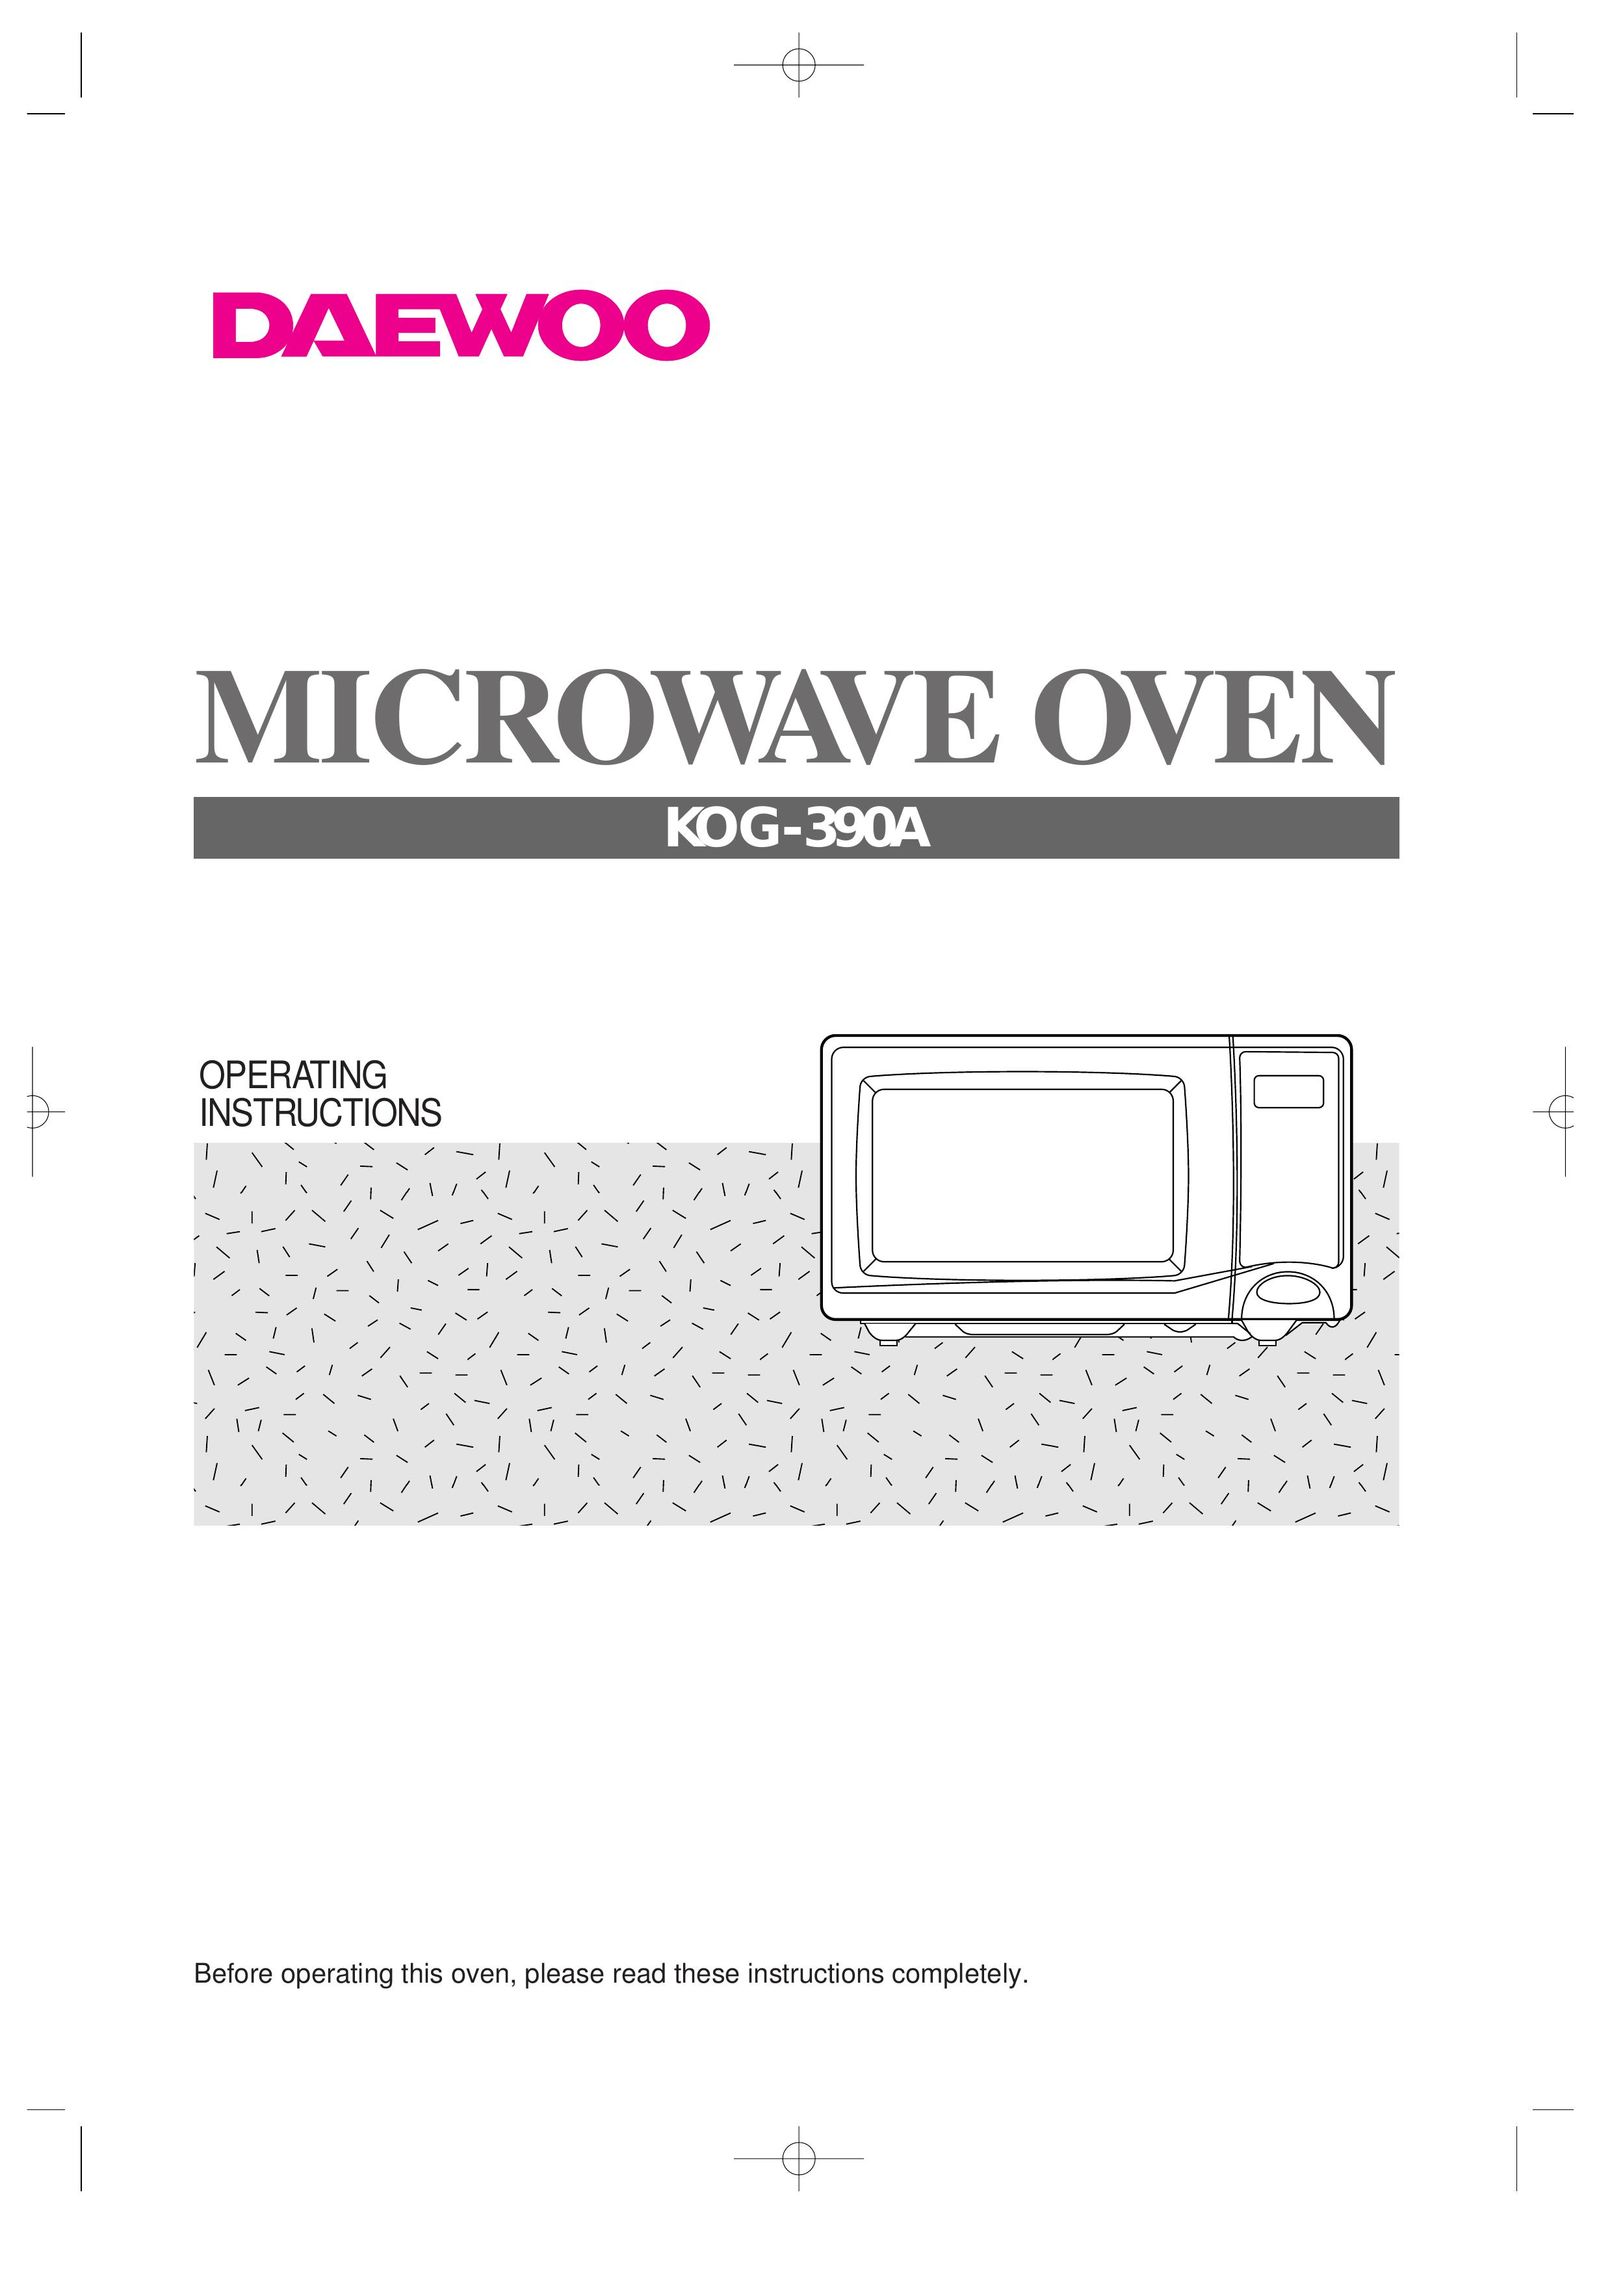 Daewoo KOG-390A Microwave Oven User Manual